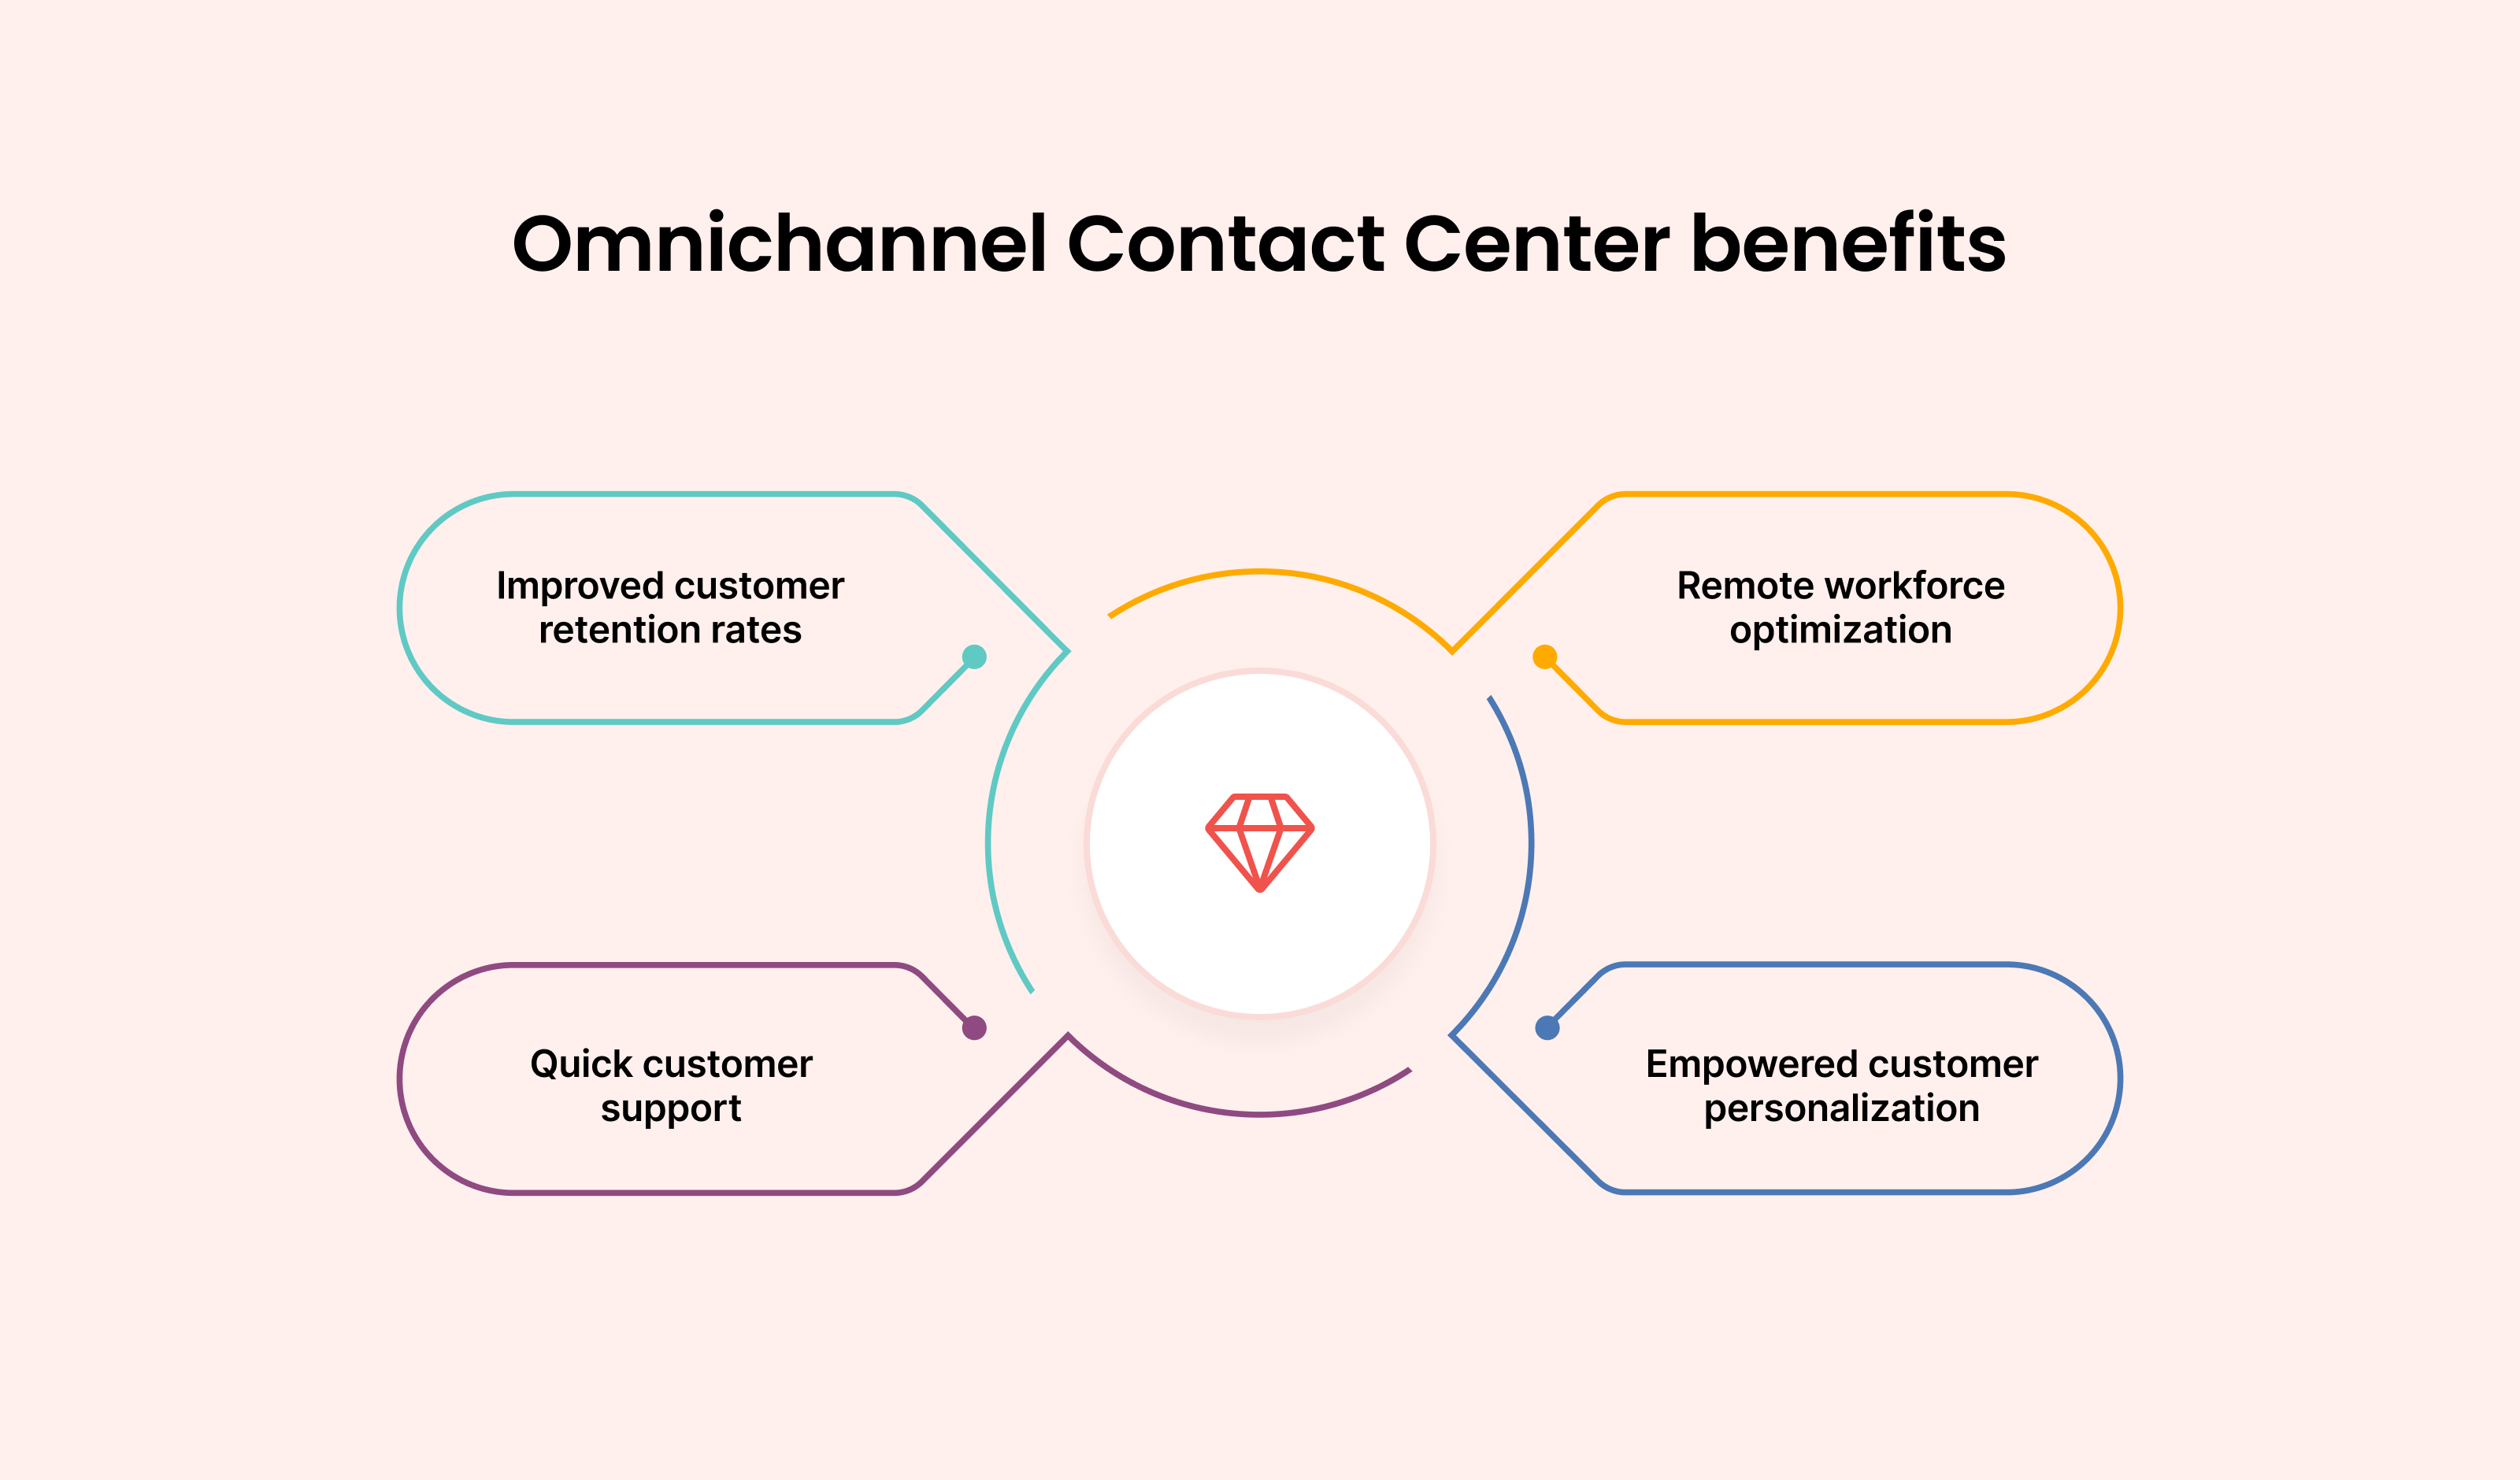 Omnichannel Contact Center Benefits: